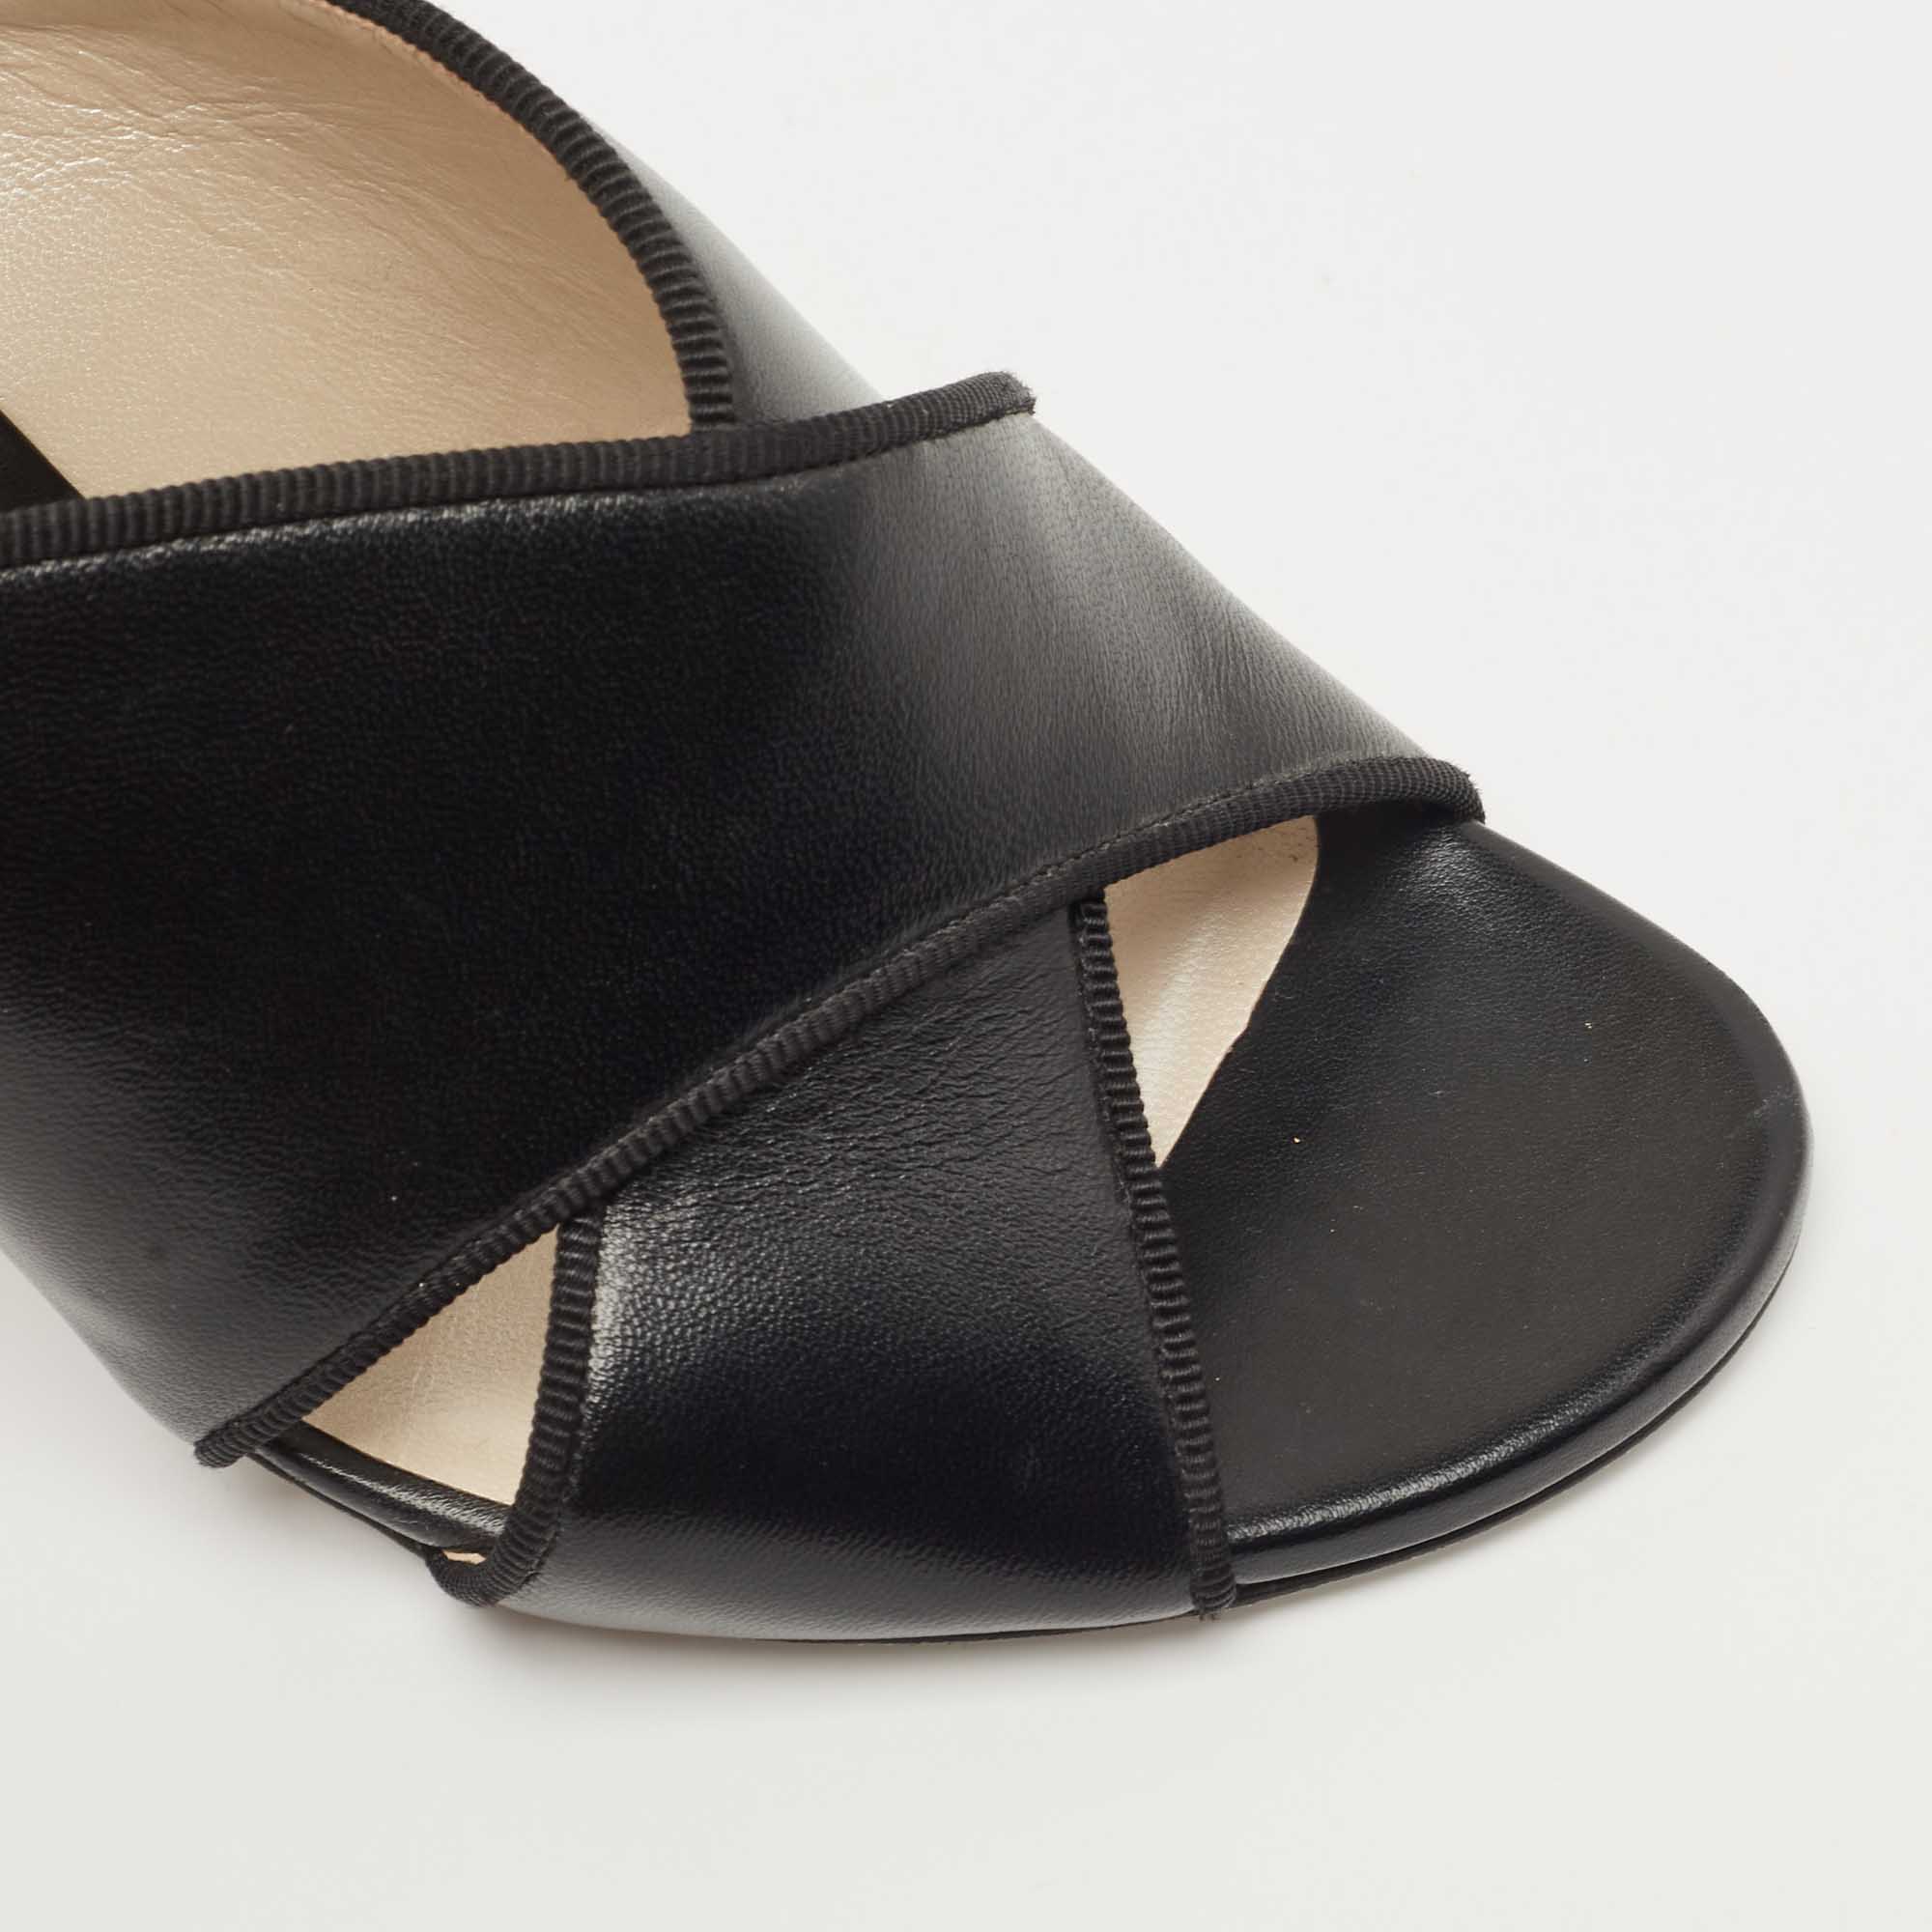 Rene Caovilla Black Leather And Suede Crystal Embellished Block Heel Sandals Size 37